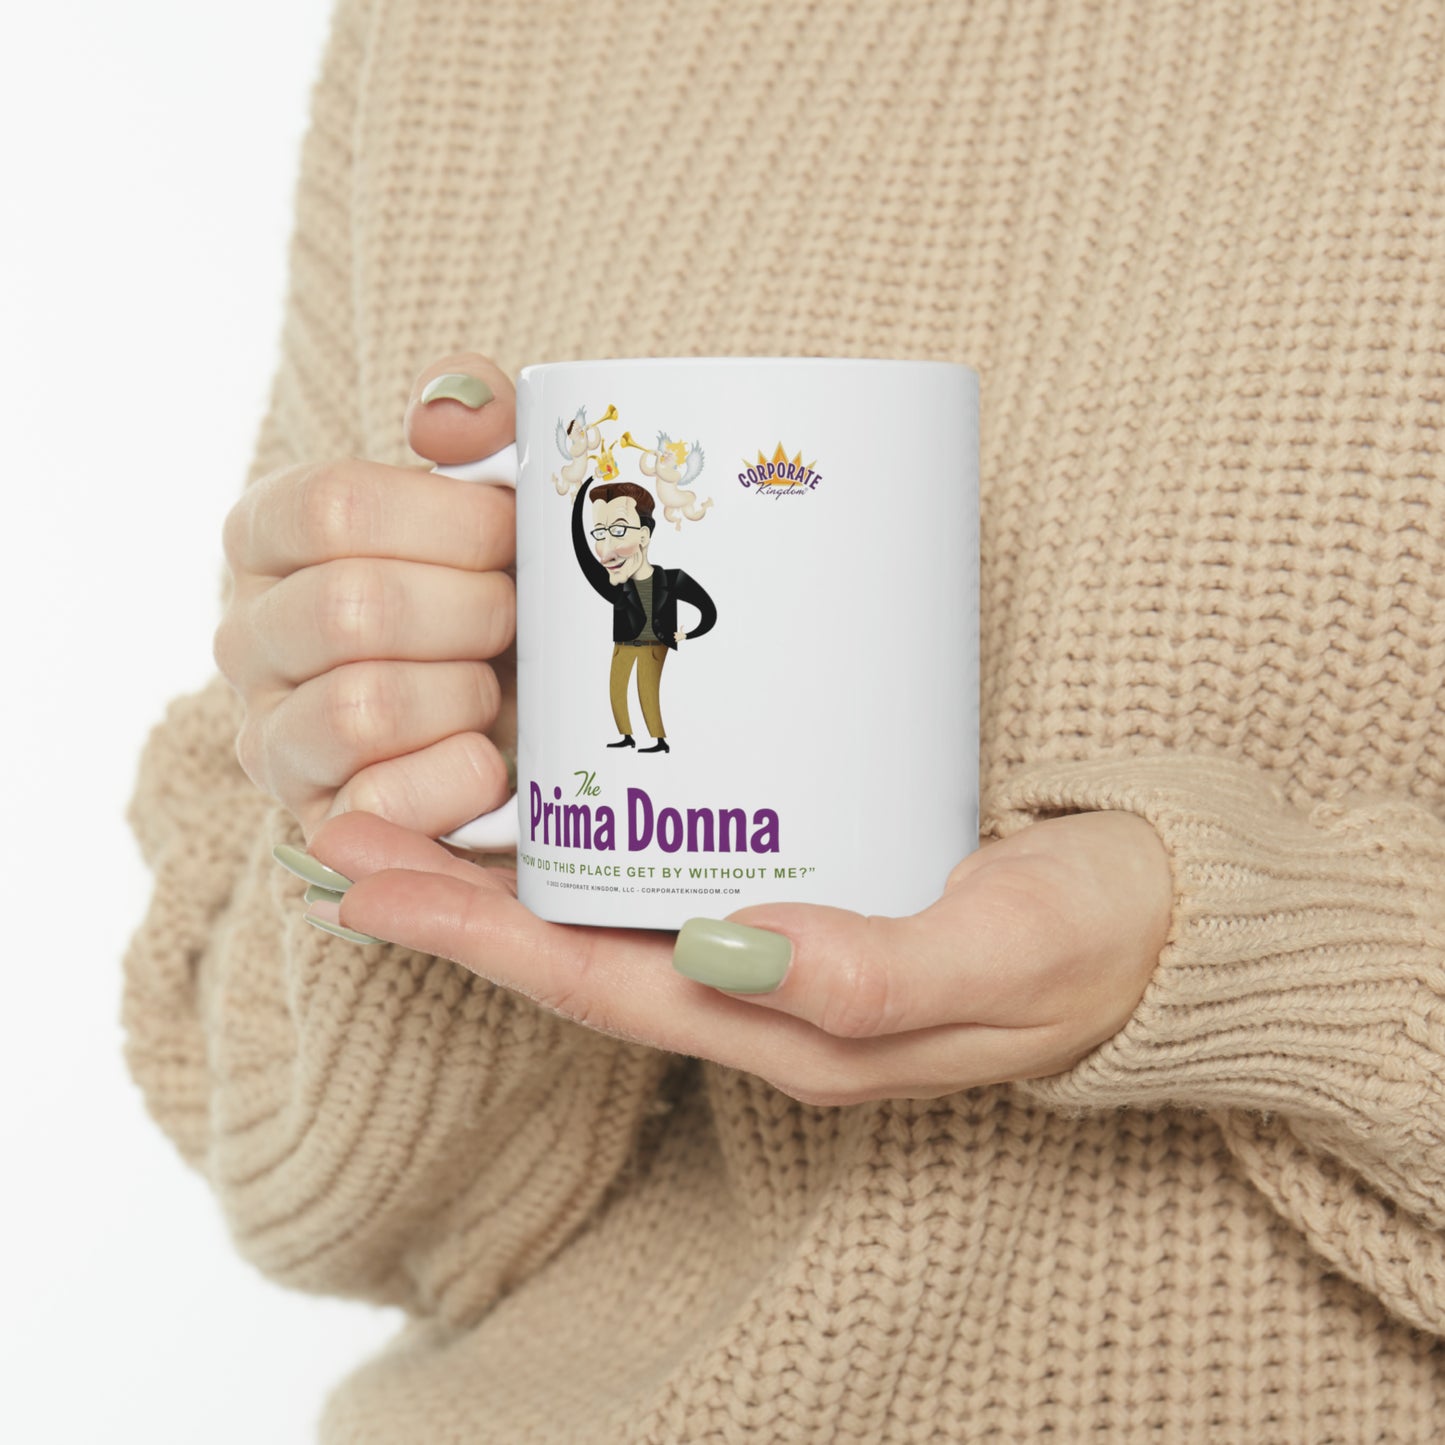 Prima Donna Coffee Mug by Corporate Kingdom®